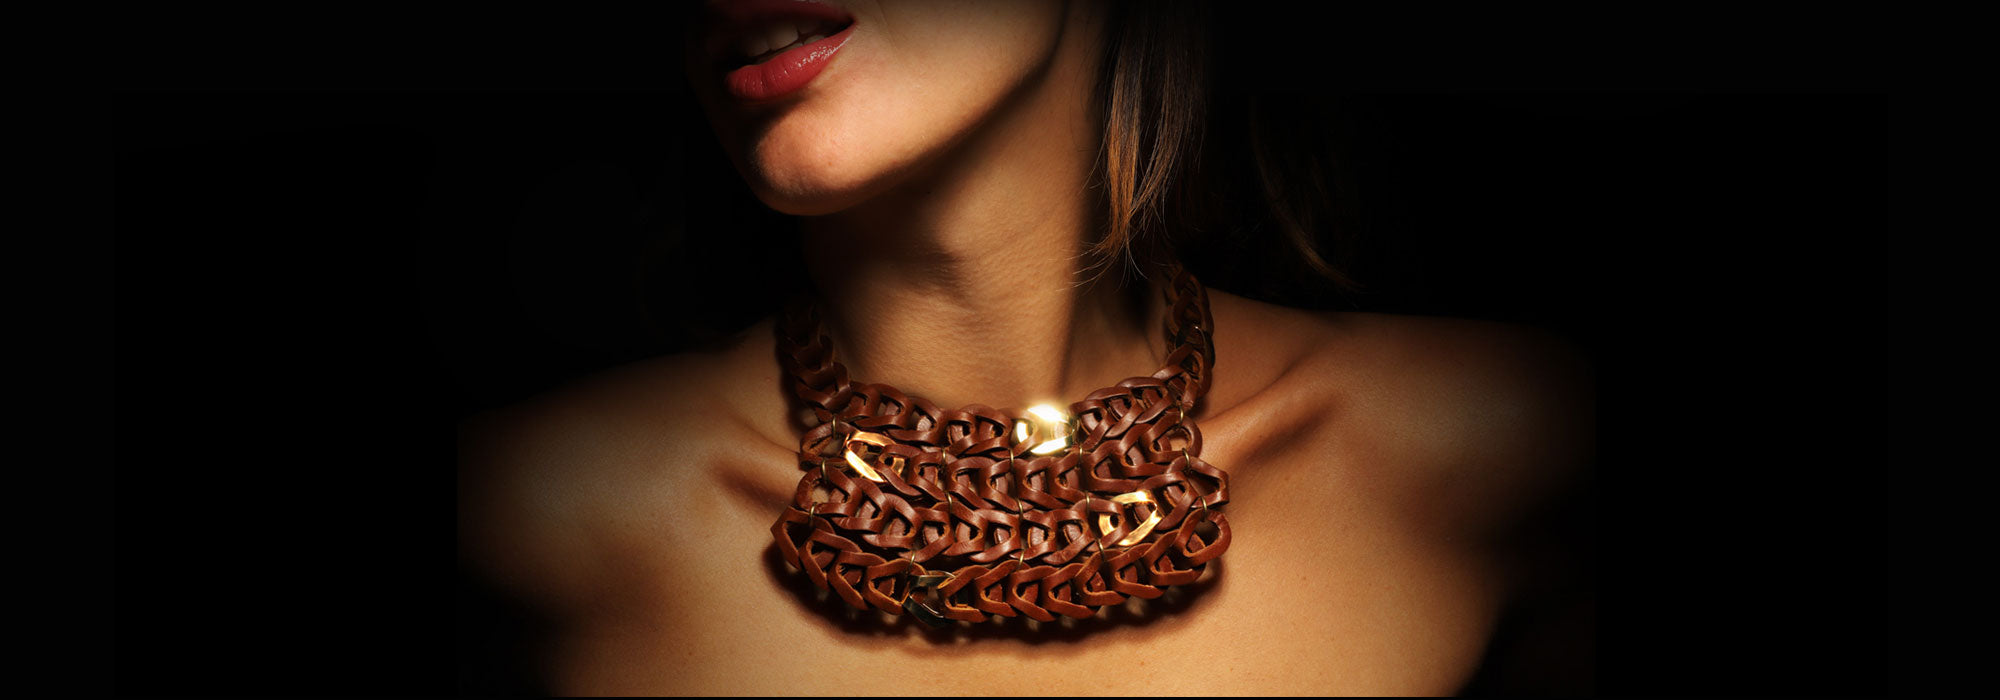 Gladiator Necklace leather and 18 karat gold by Solange Azagury-Partridge